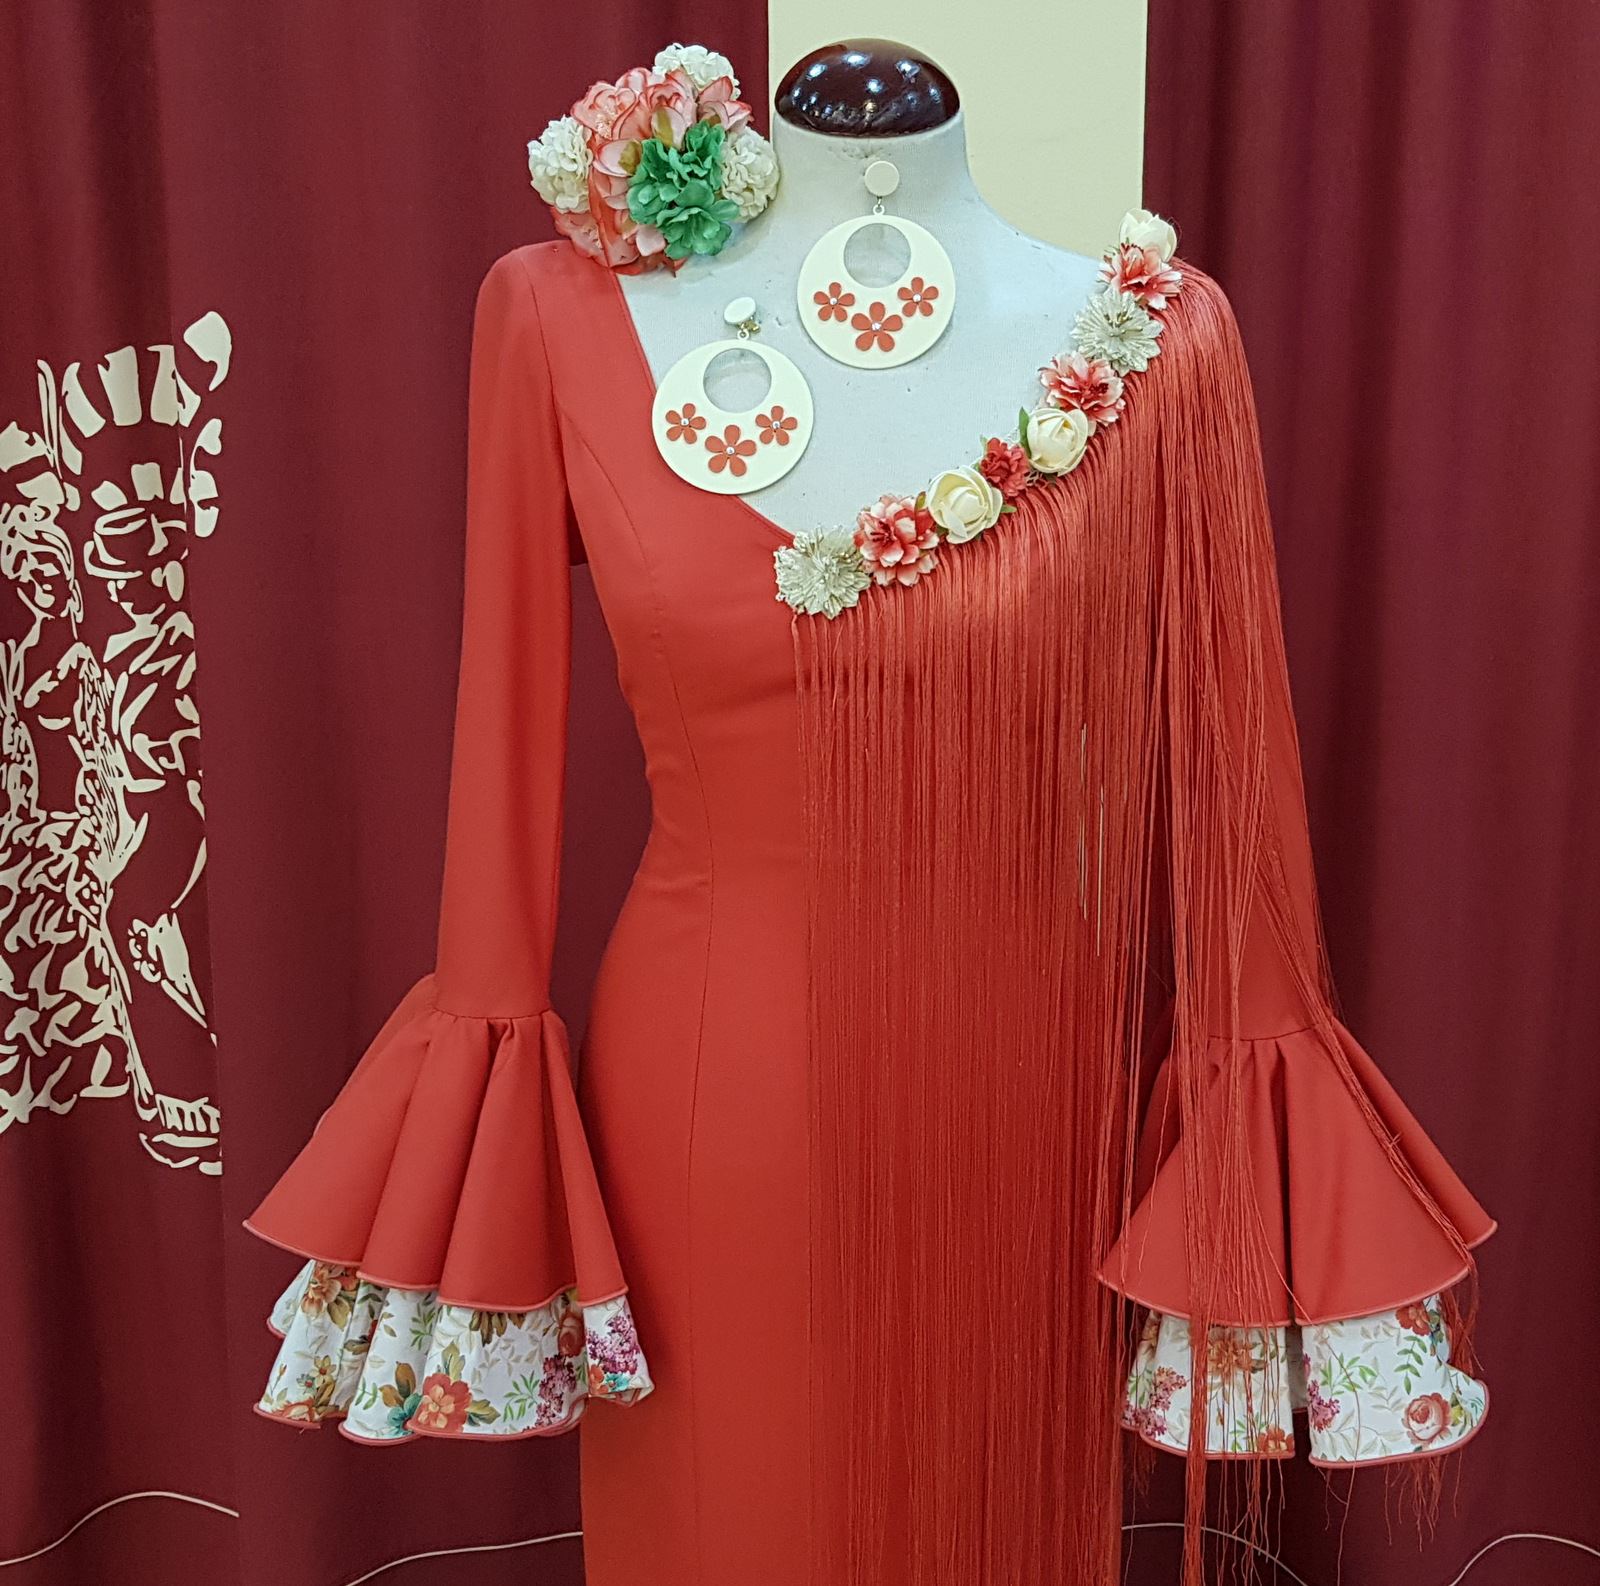 Vestido Flamenca Señora - Modelo Albero Rojo - PEDROCHE GITANA Y